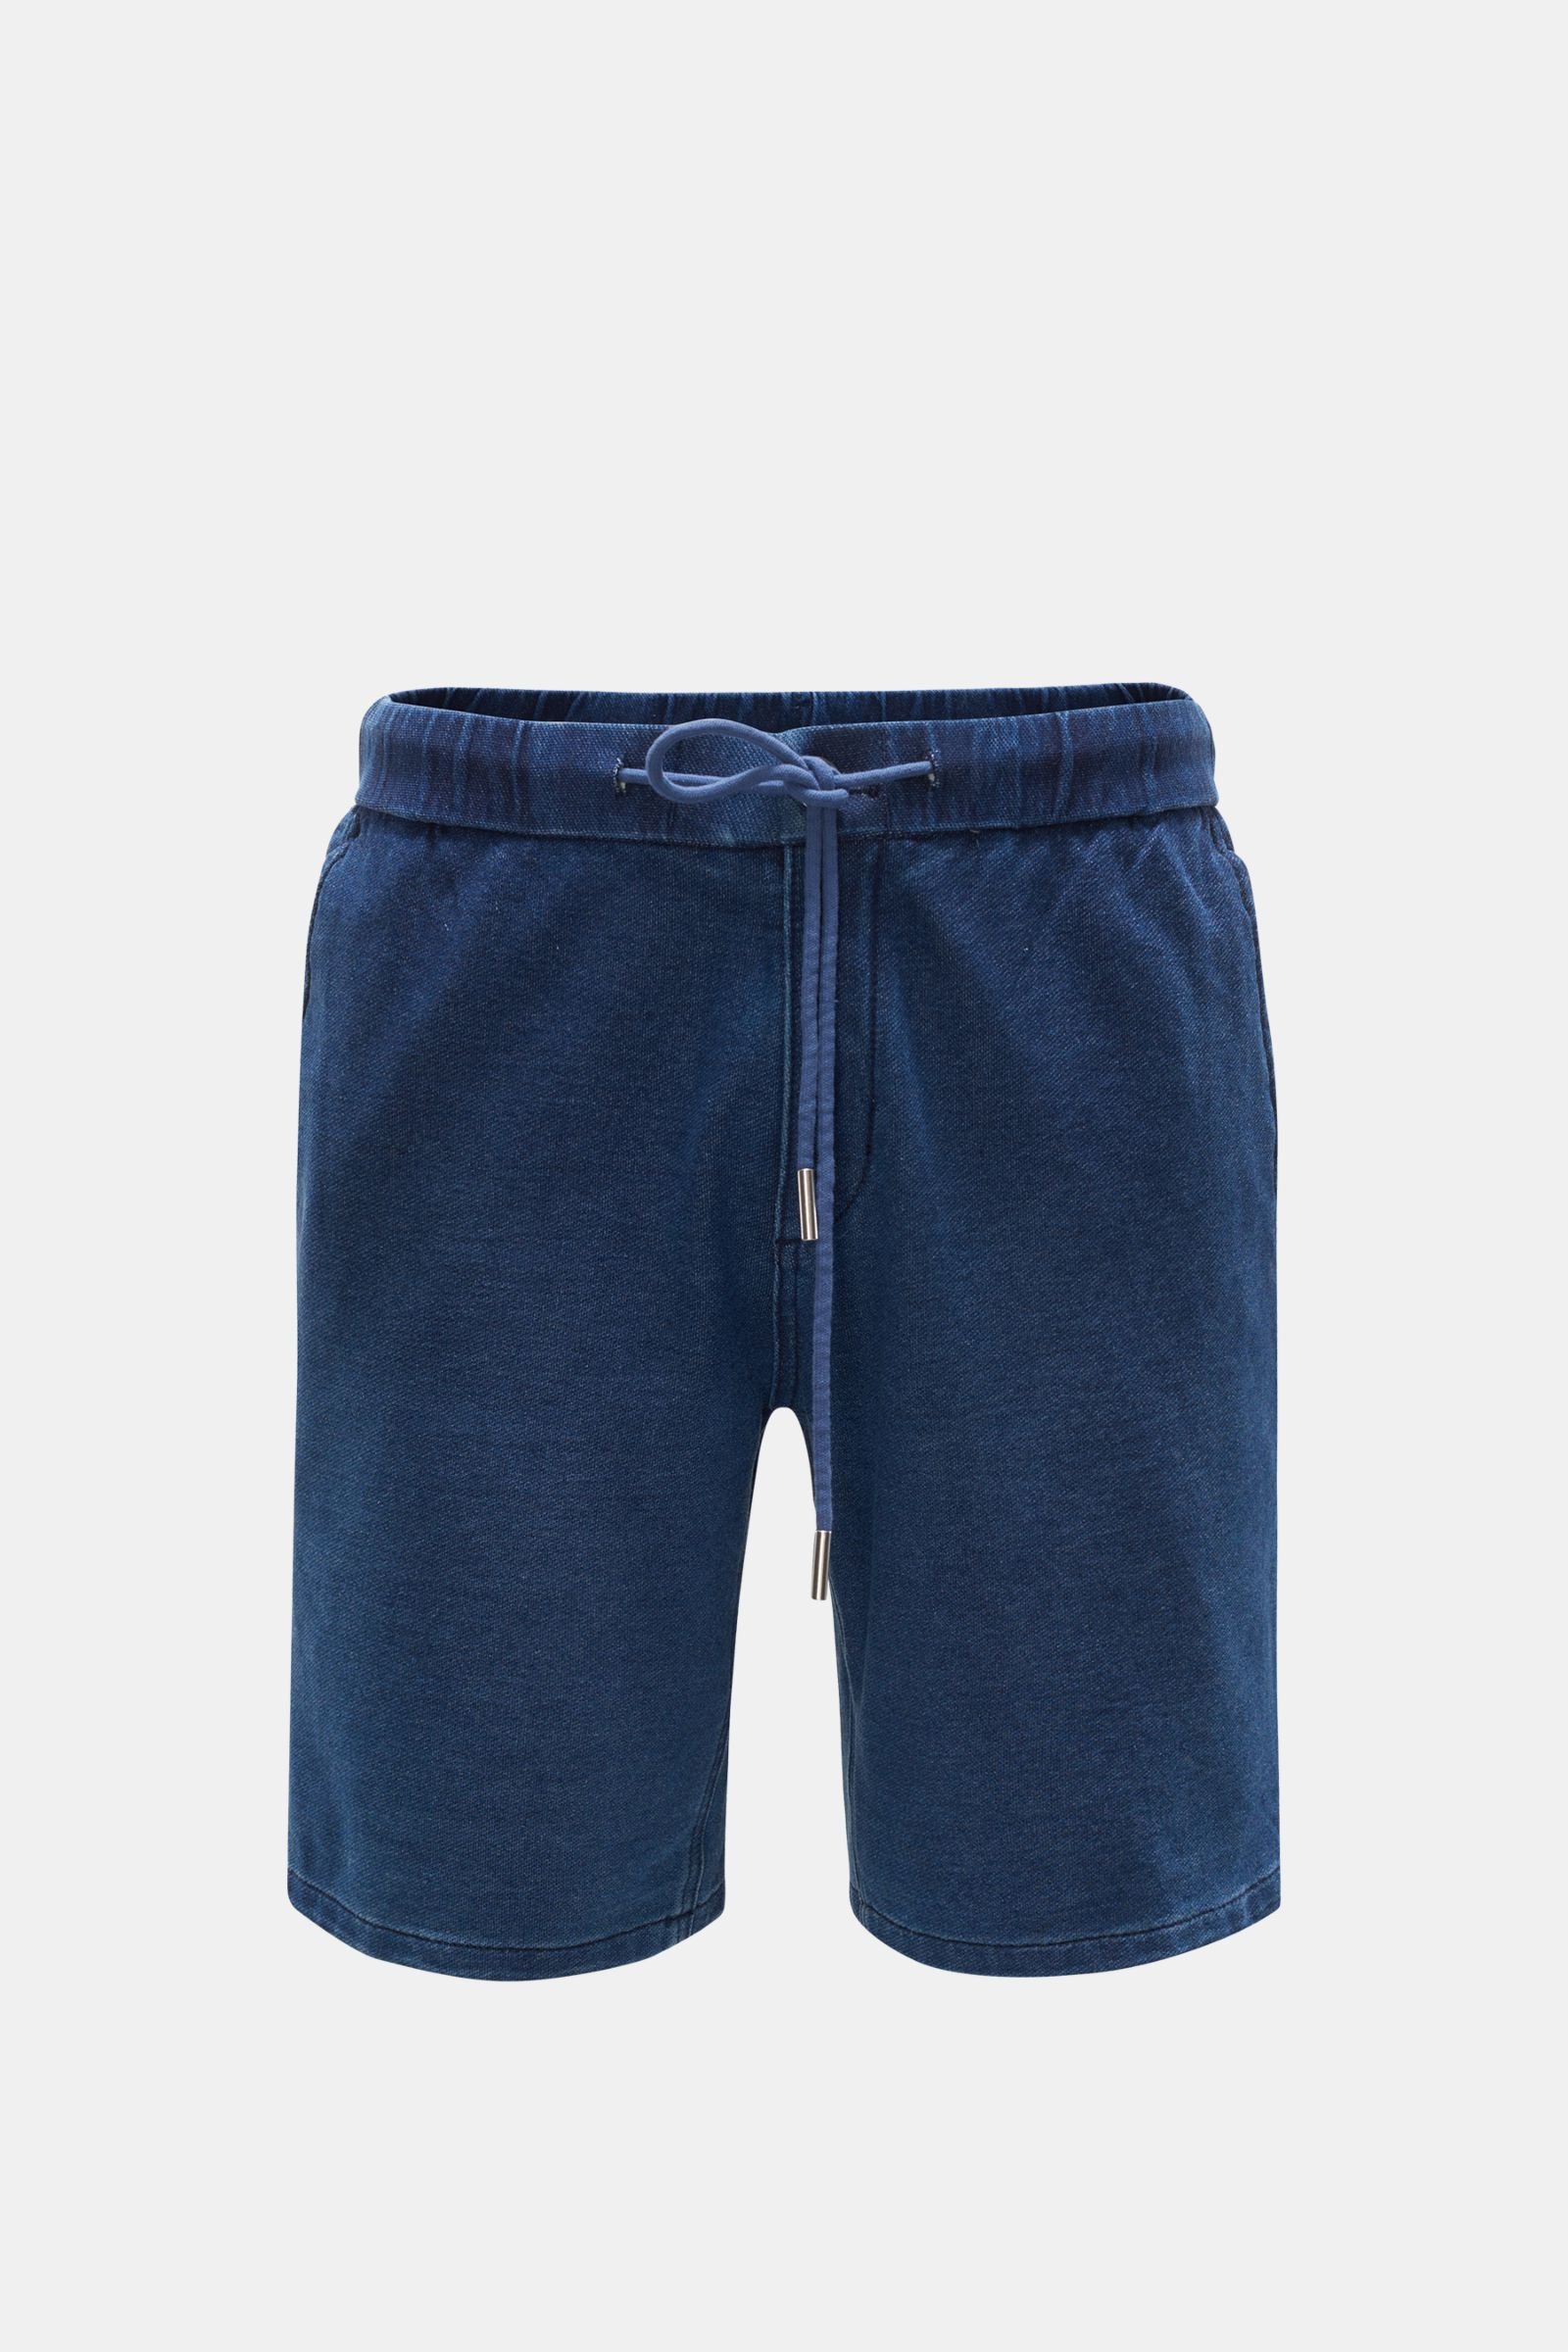 Jersey-Shorts dunkelblau